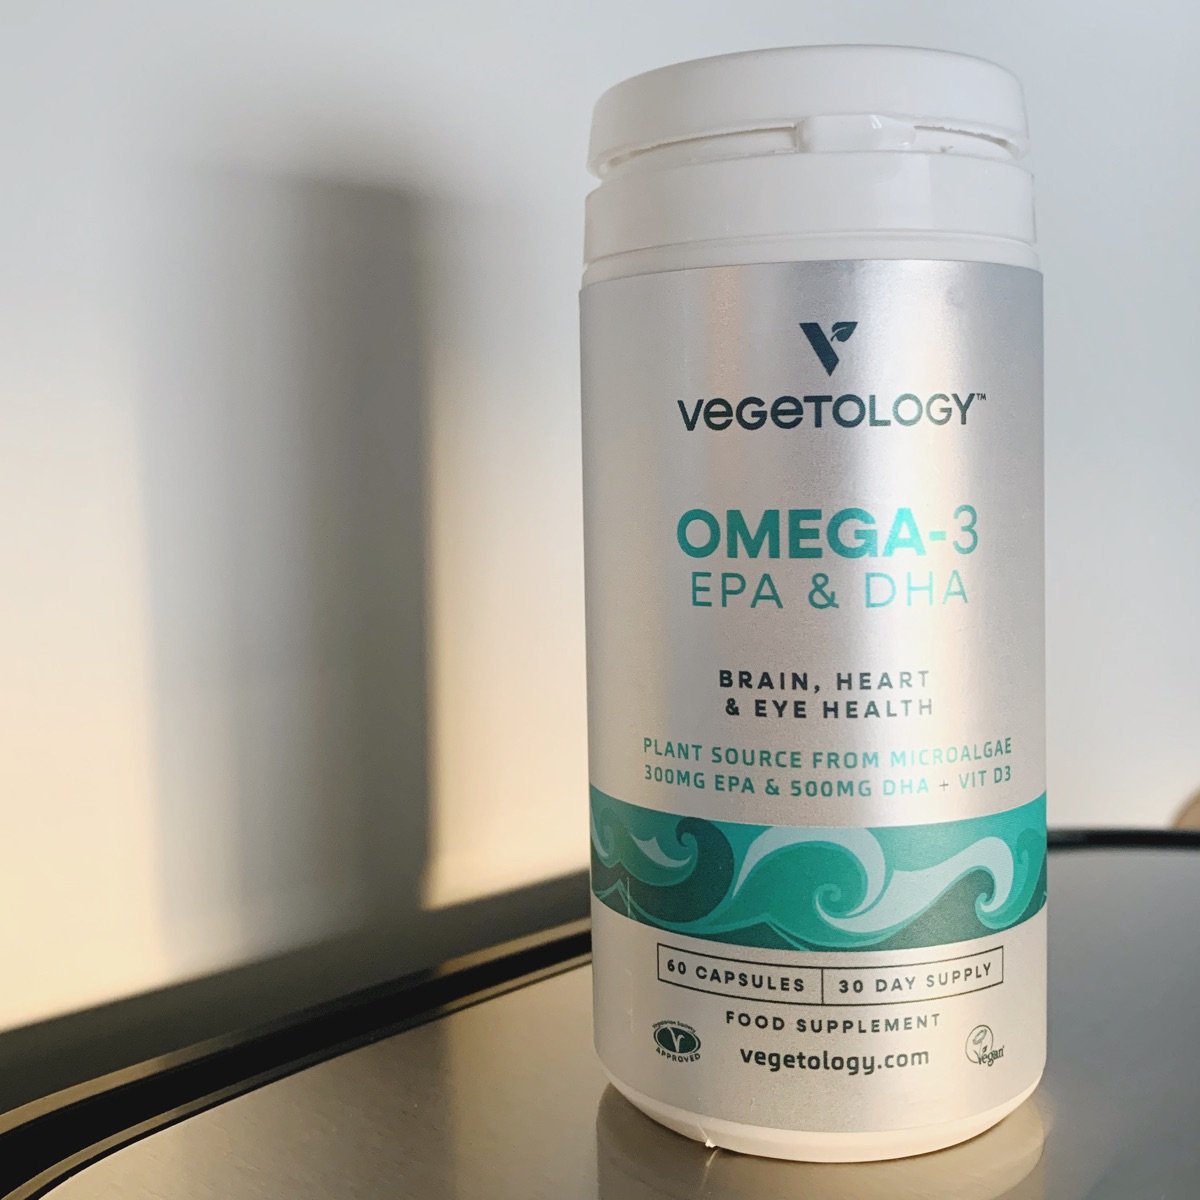 Vegan Omega-3 Vegan Liquid Supplements - Vegetology